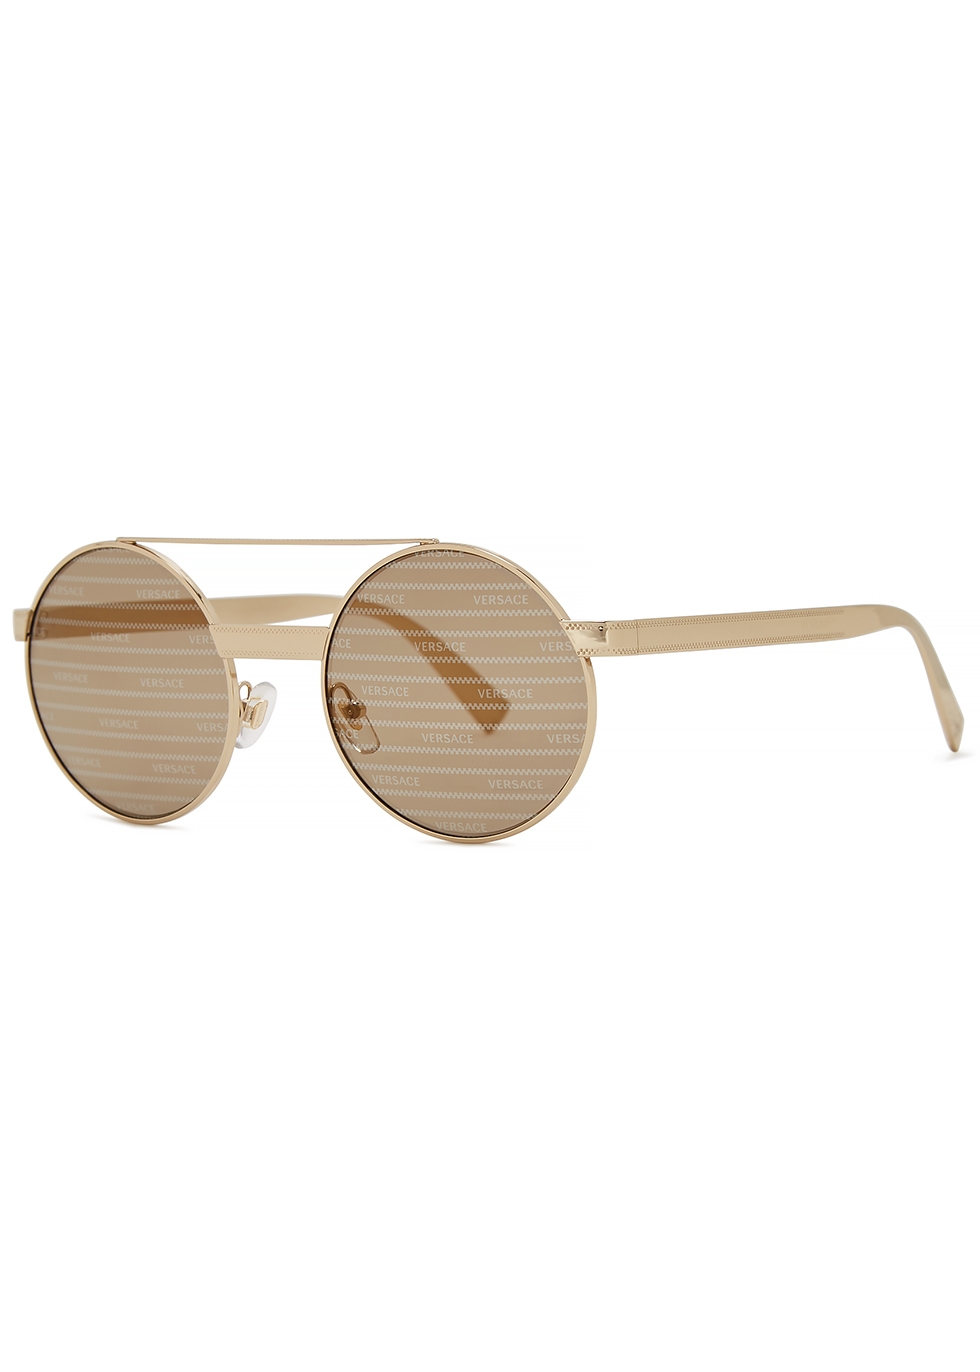 versace circle sunglasses